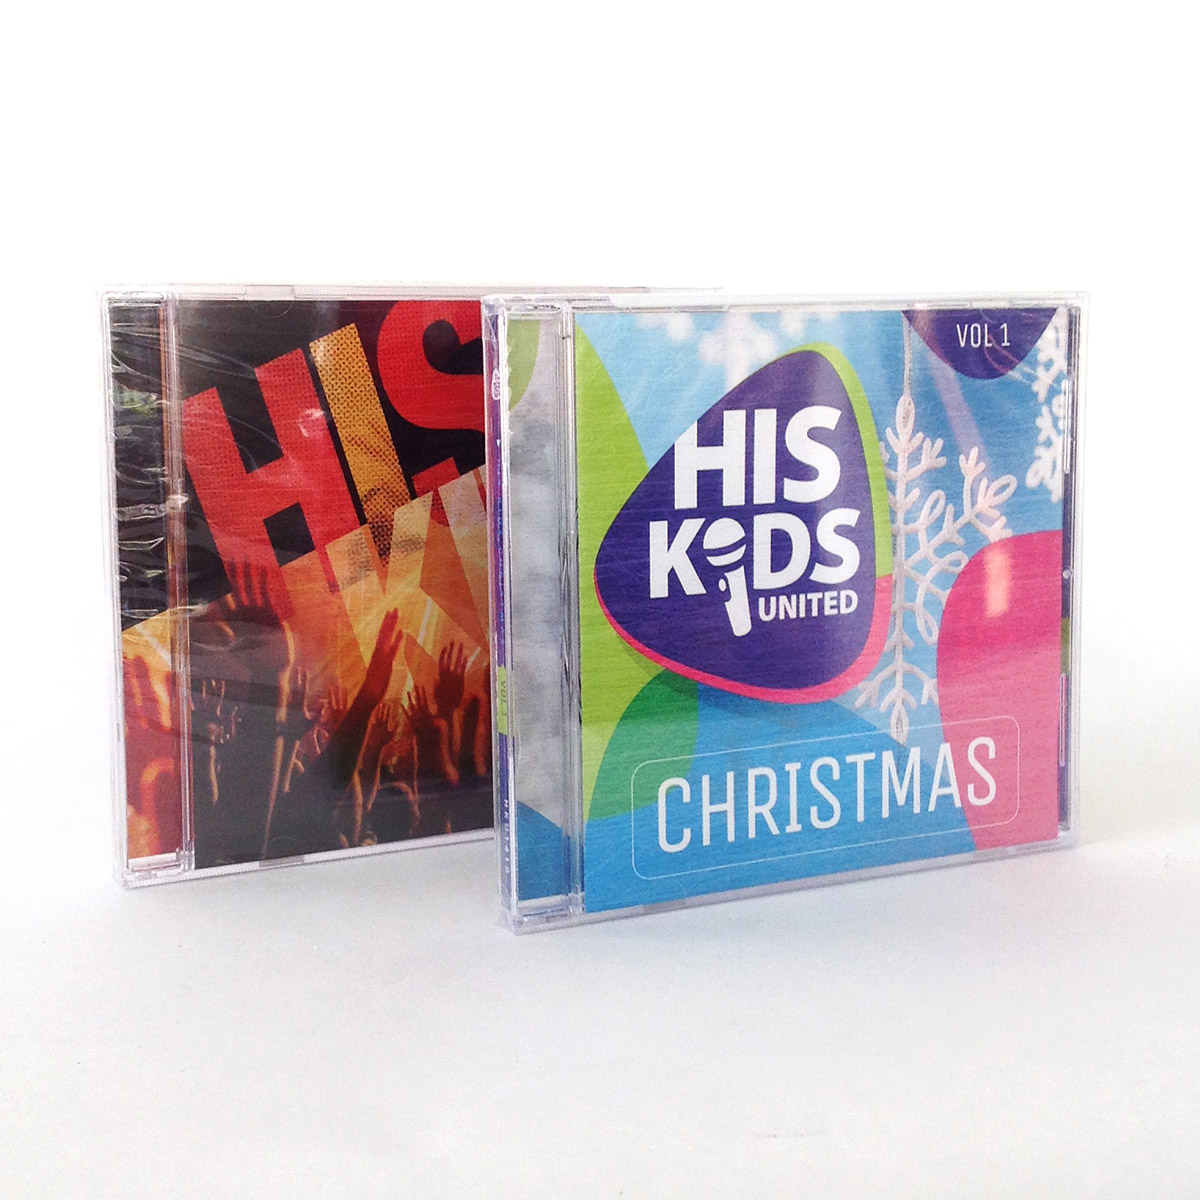 His Kids - CD / Compact Disc Replication